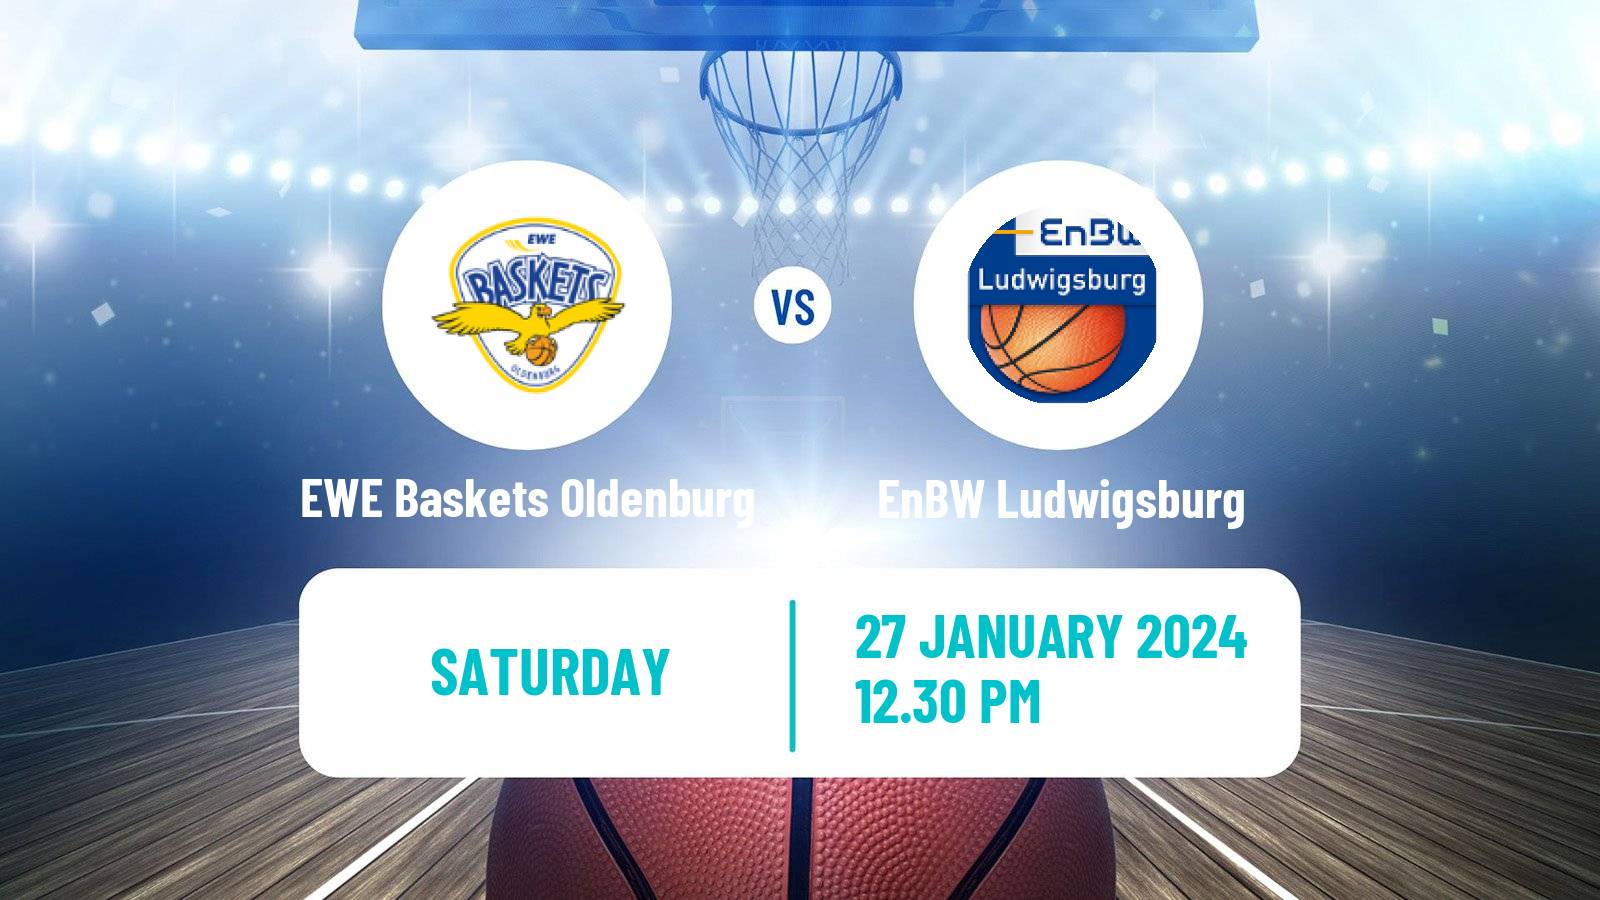 Basketball German BBL EWE Baskets Oldenburg - EnBW Ludwigsburg